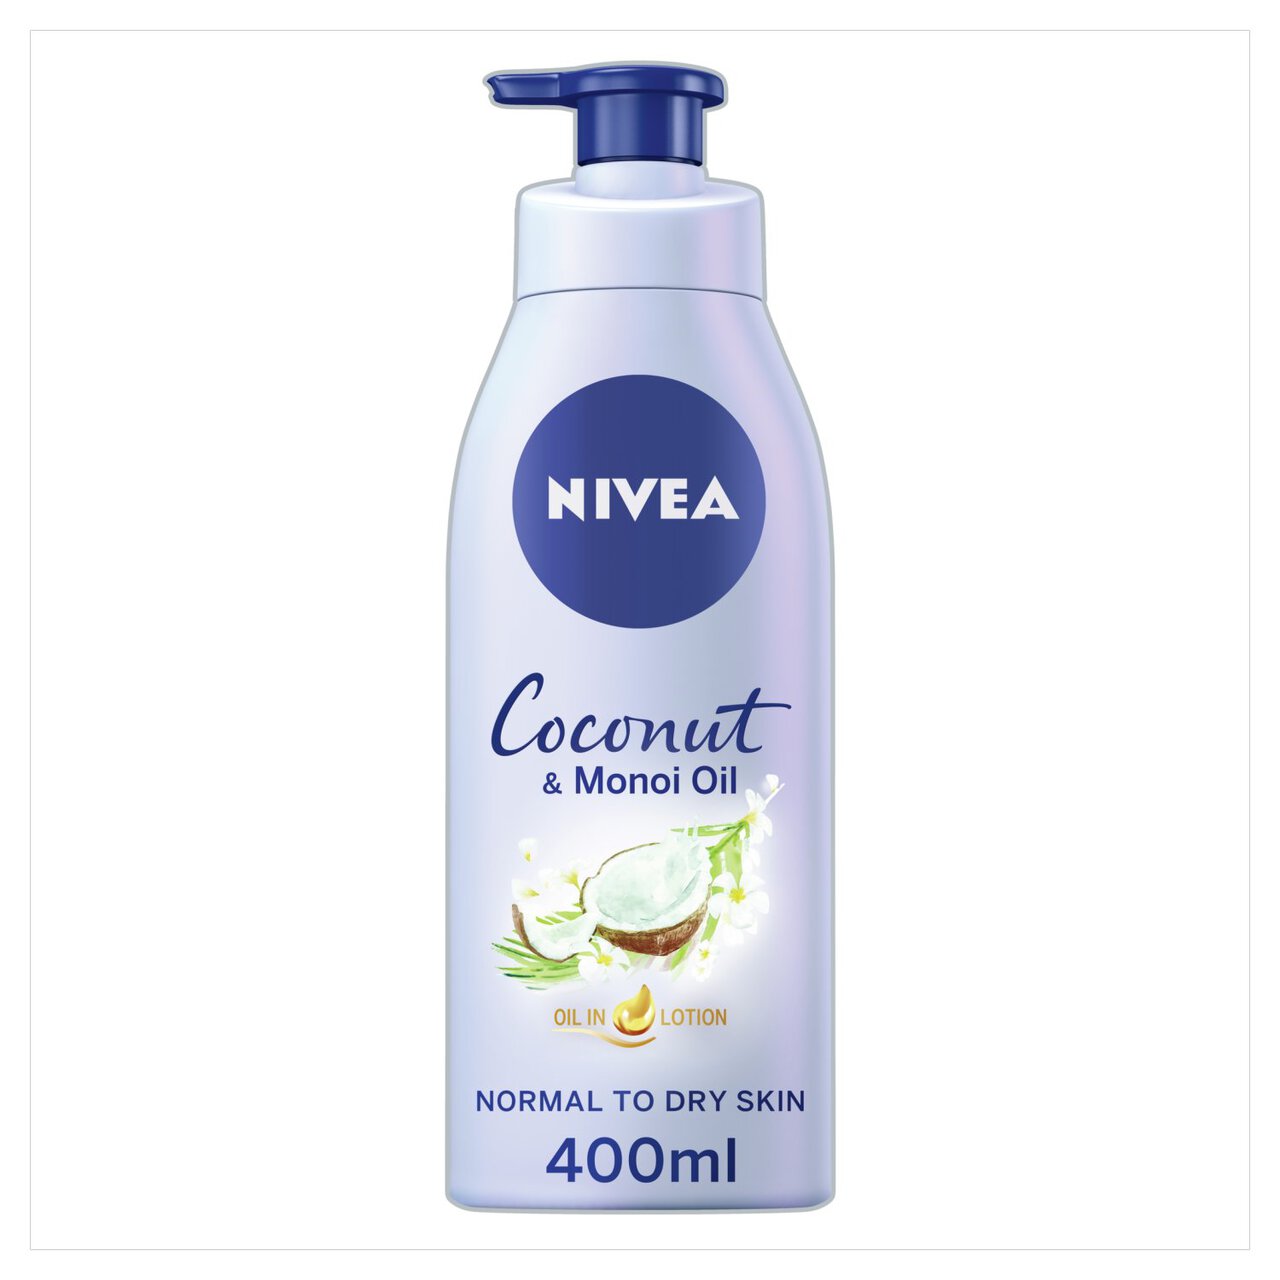 NIVEA Coconut & Monoi Oil Body Lotion for Normal to Dry Skin 400ml